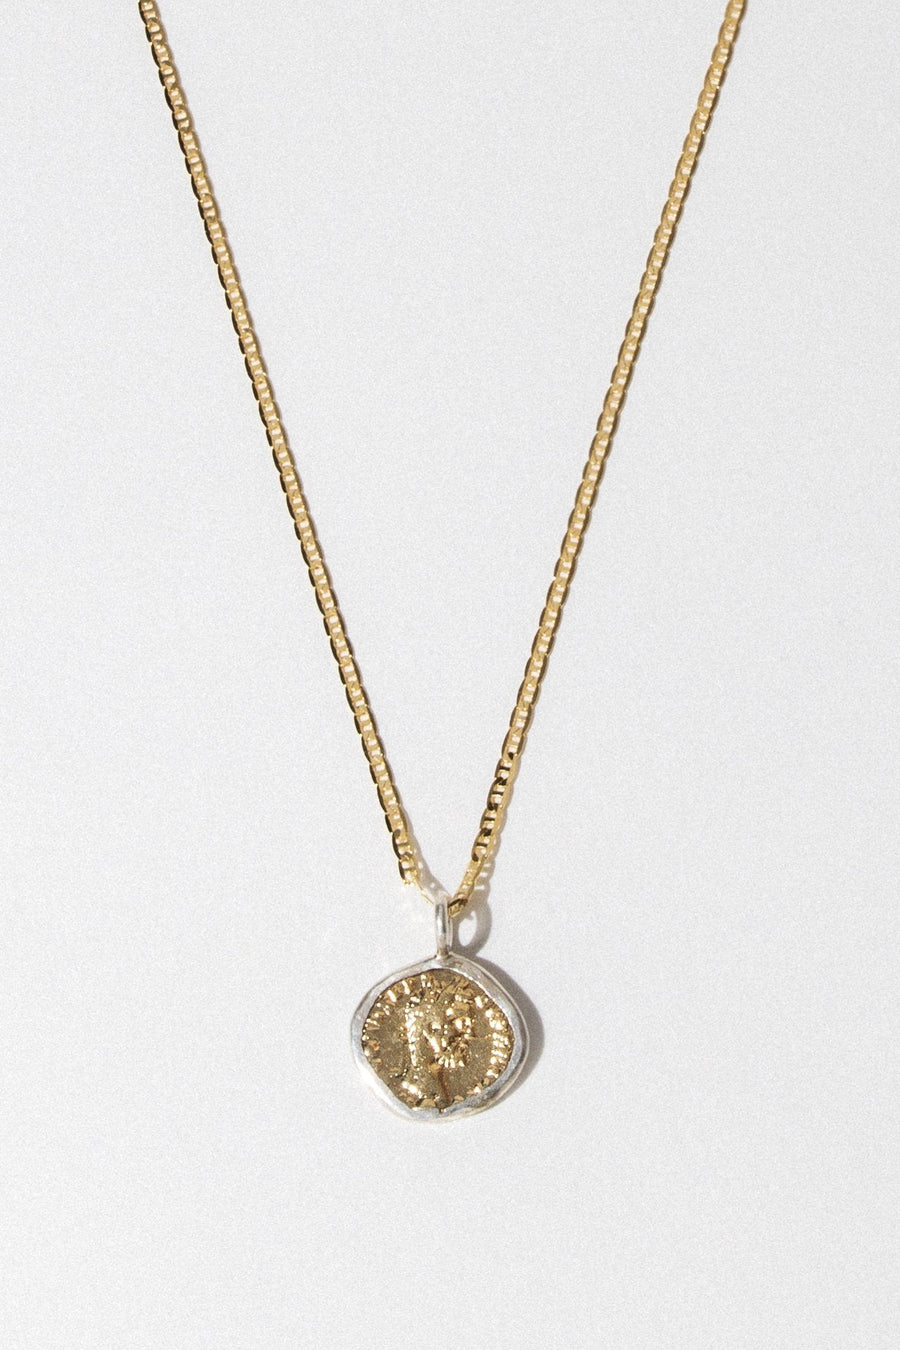 Dona Italia Jewelry Gold / 24 Inches Caesar Coin Necklace